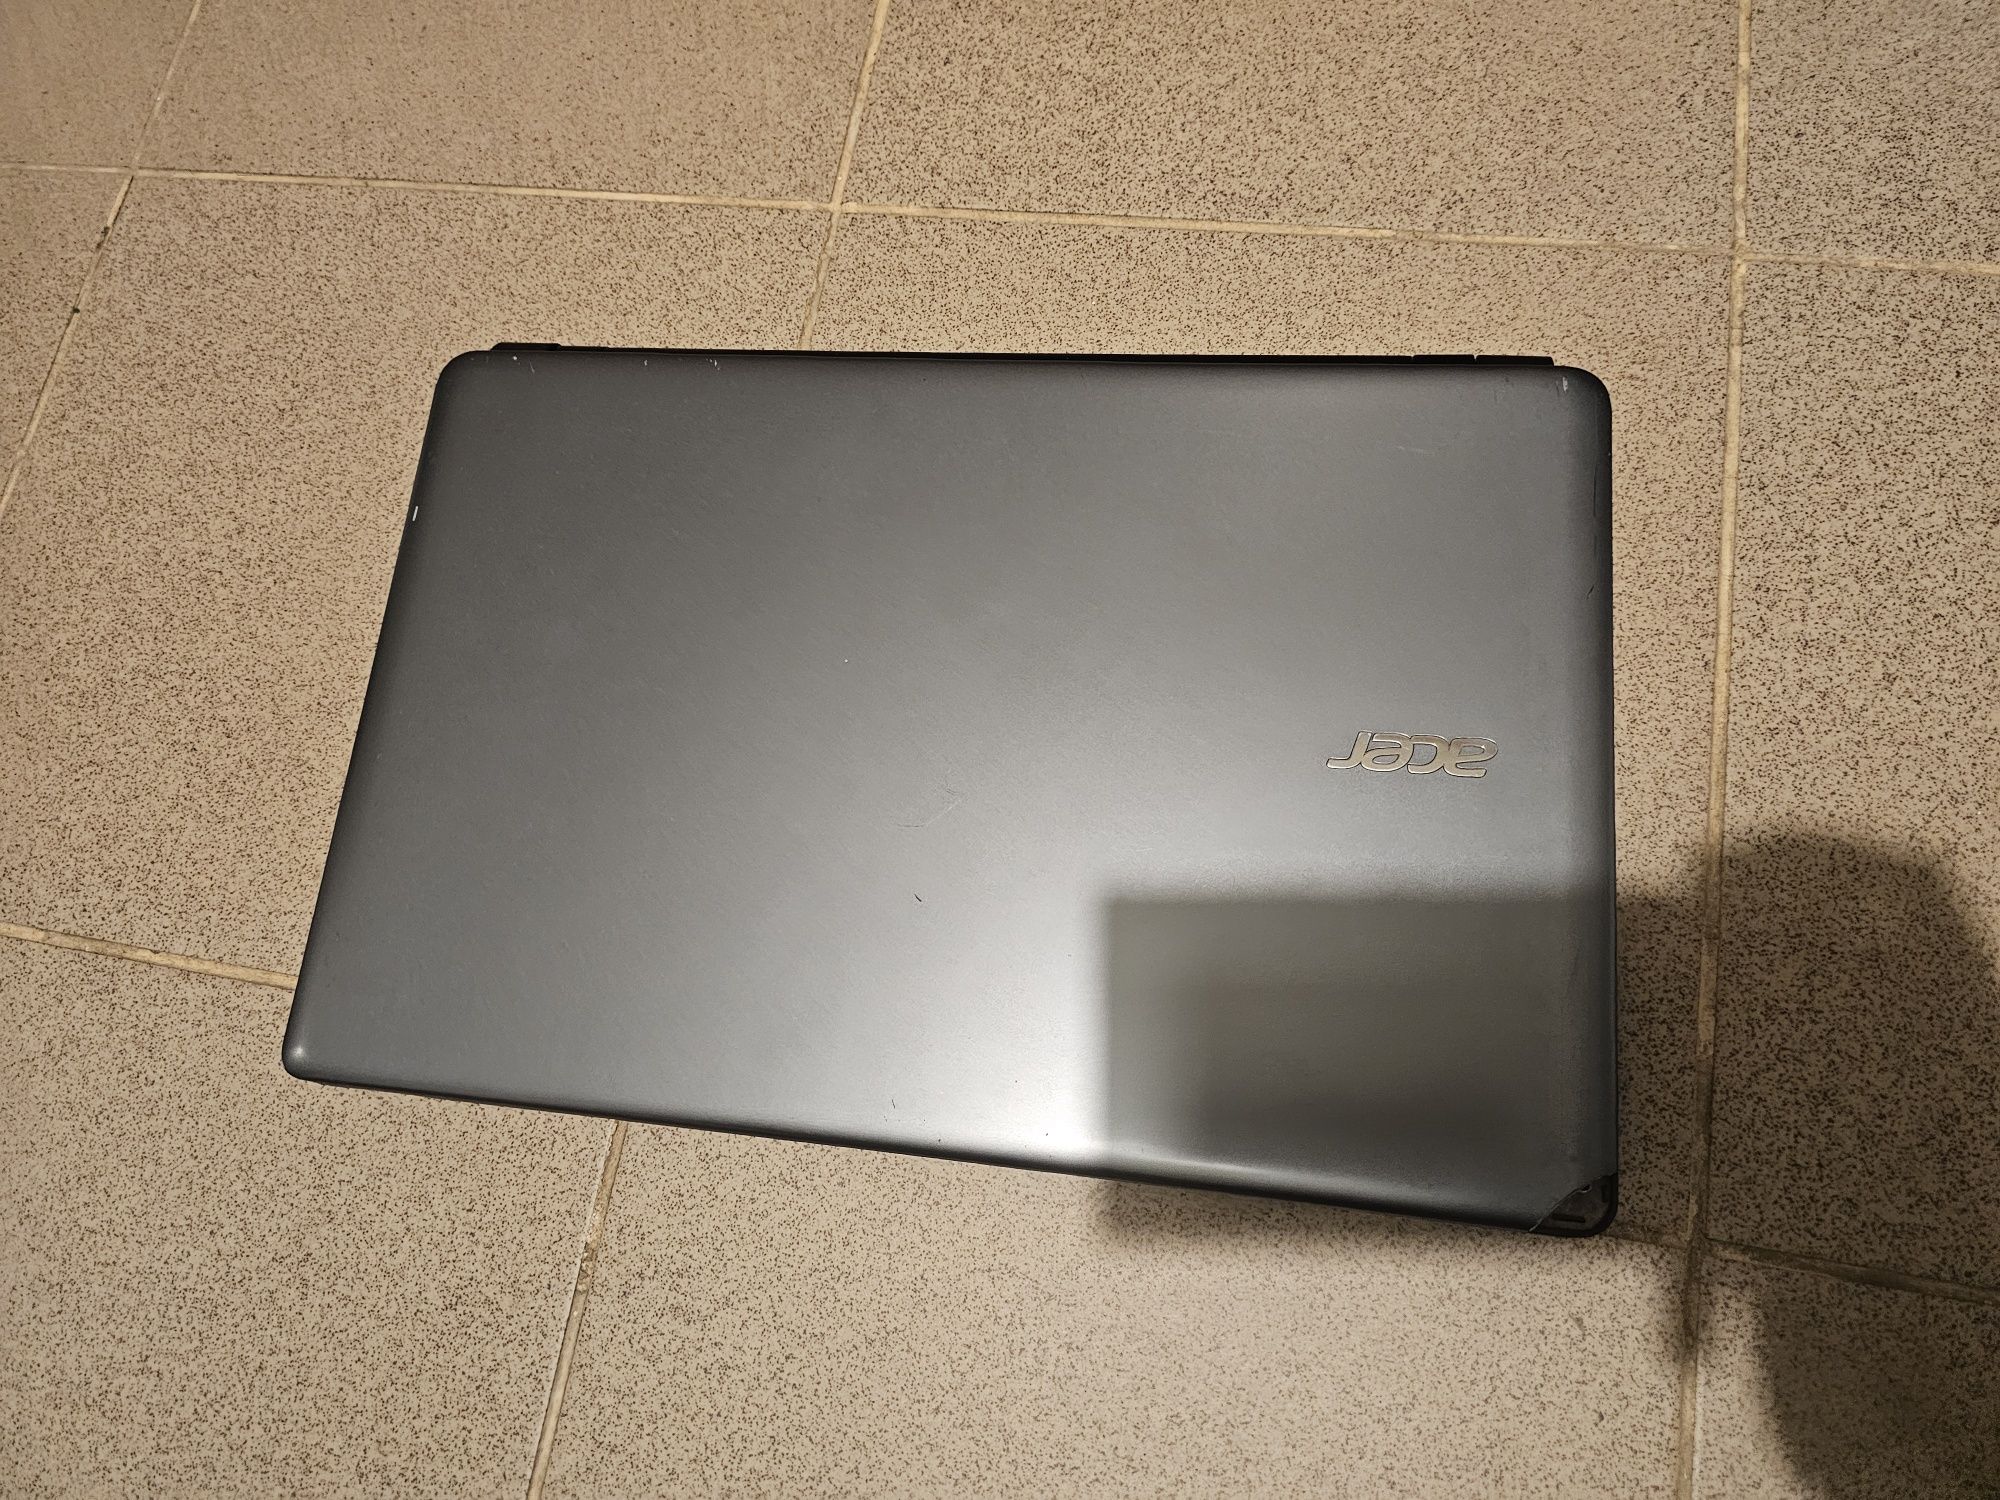 Laptop ASUS Aspire E1 series, V5WE2  defect